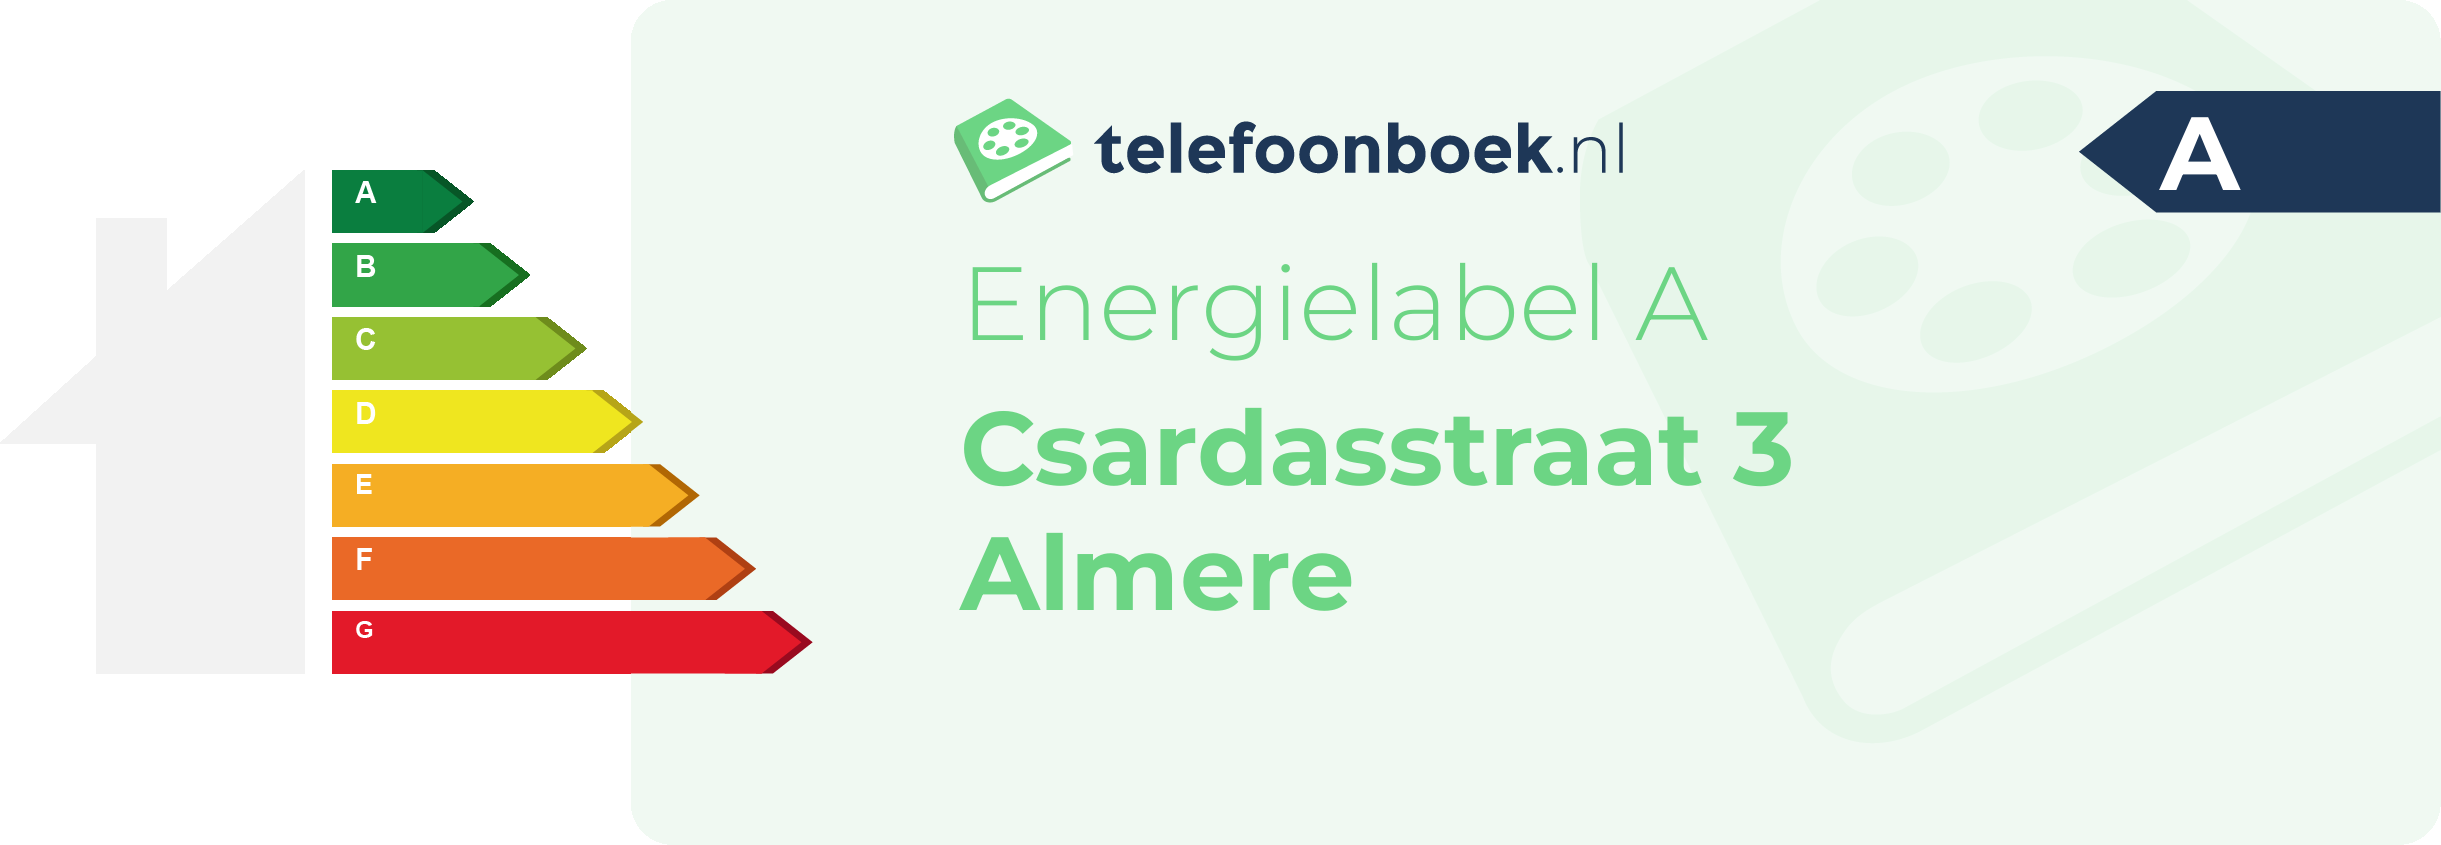 Energielabel Csardasstraat 3 Almere